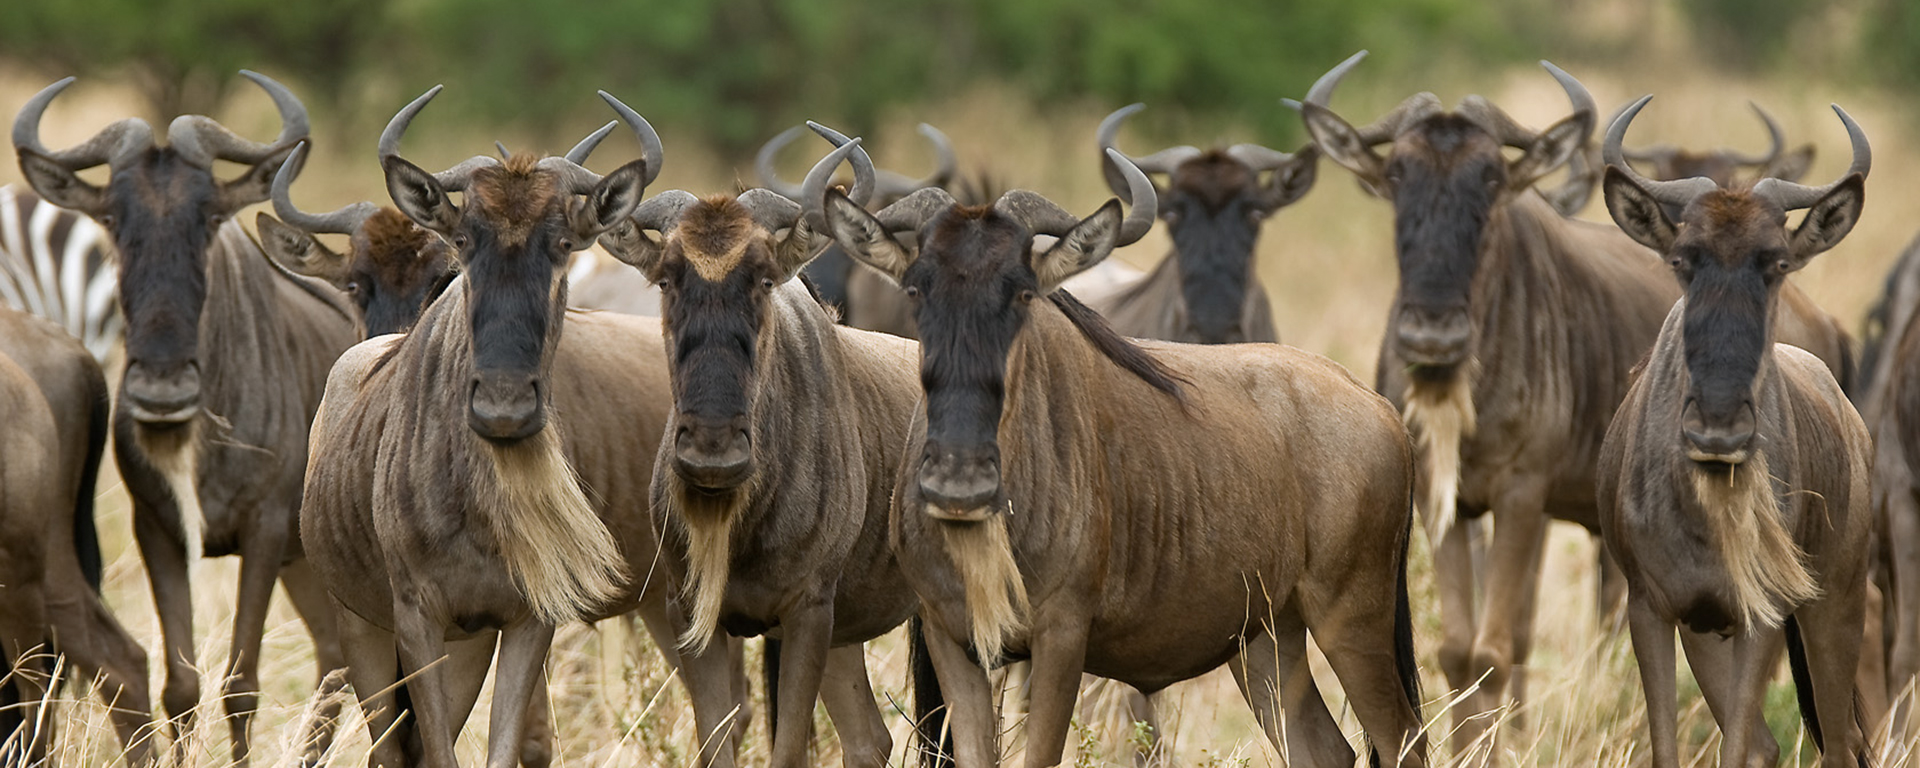 tanzania_olakira-camp_olakira-camp-wildebeest-serengeti